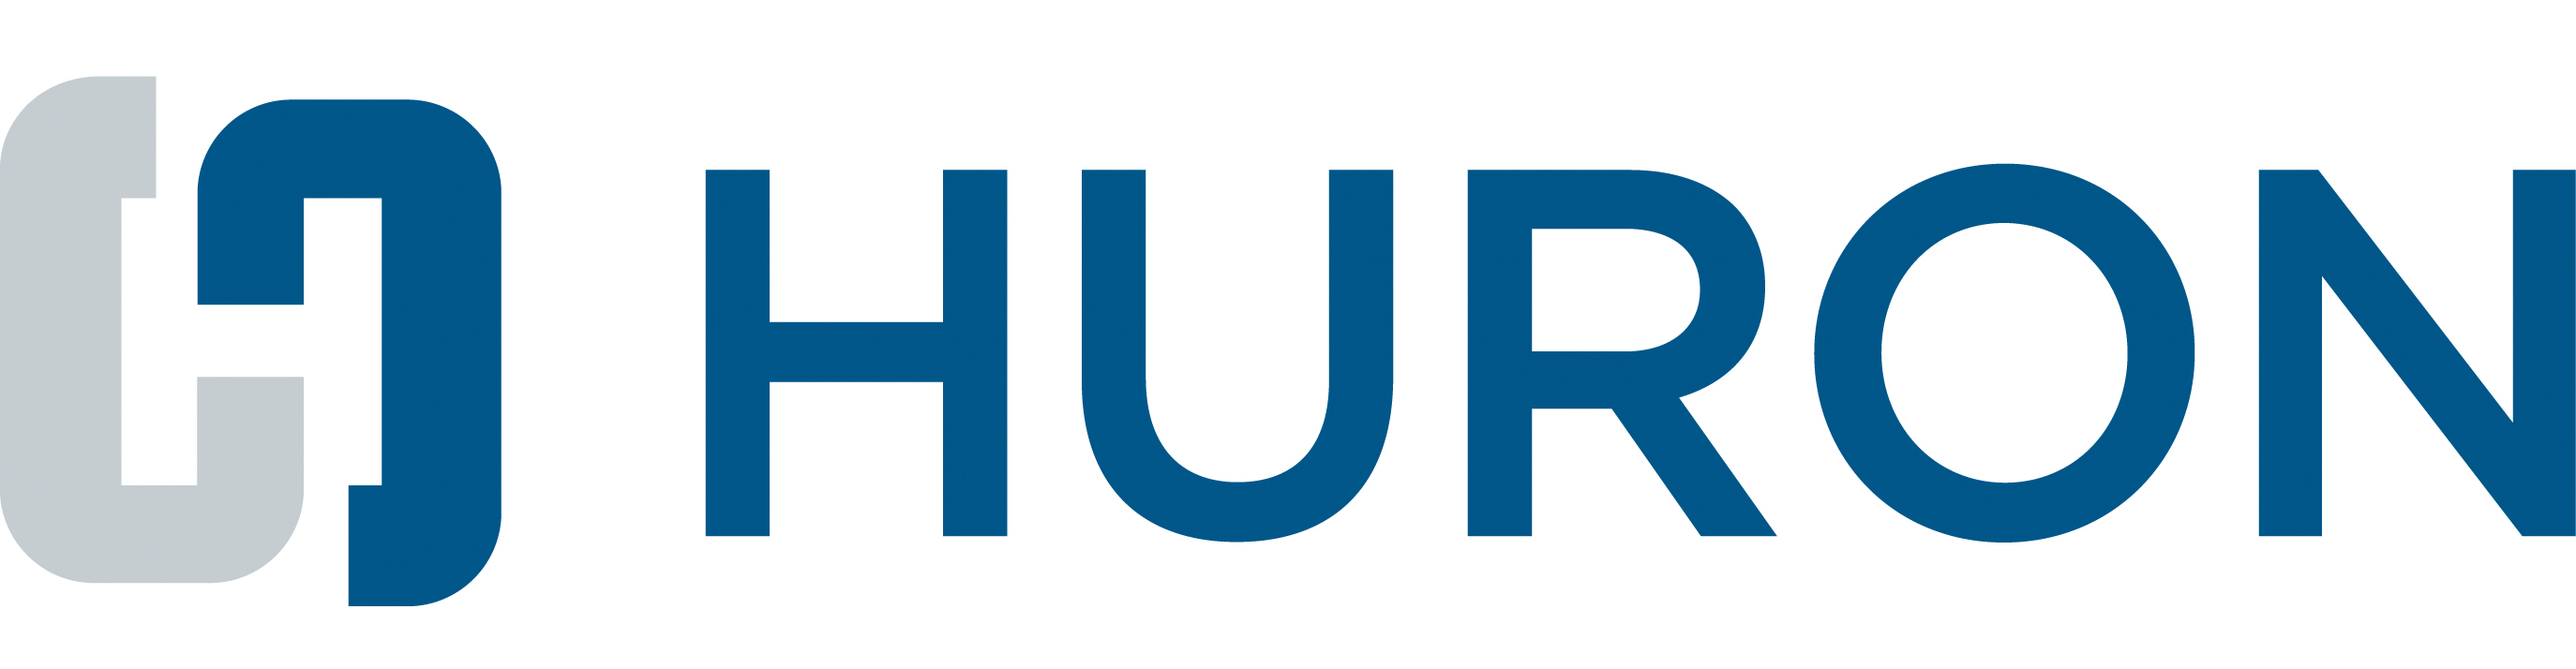 Huron Logo